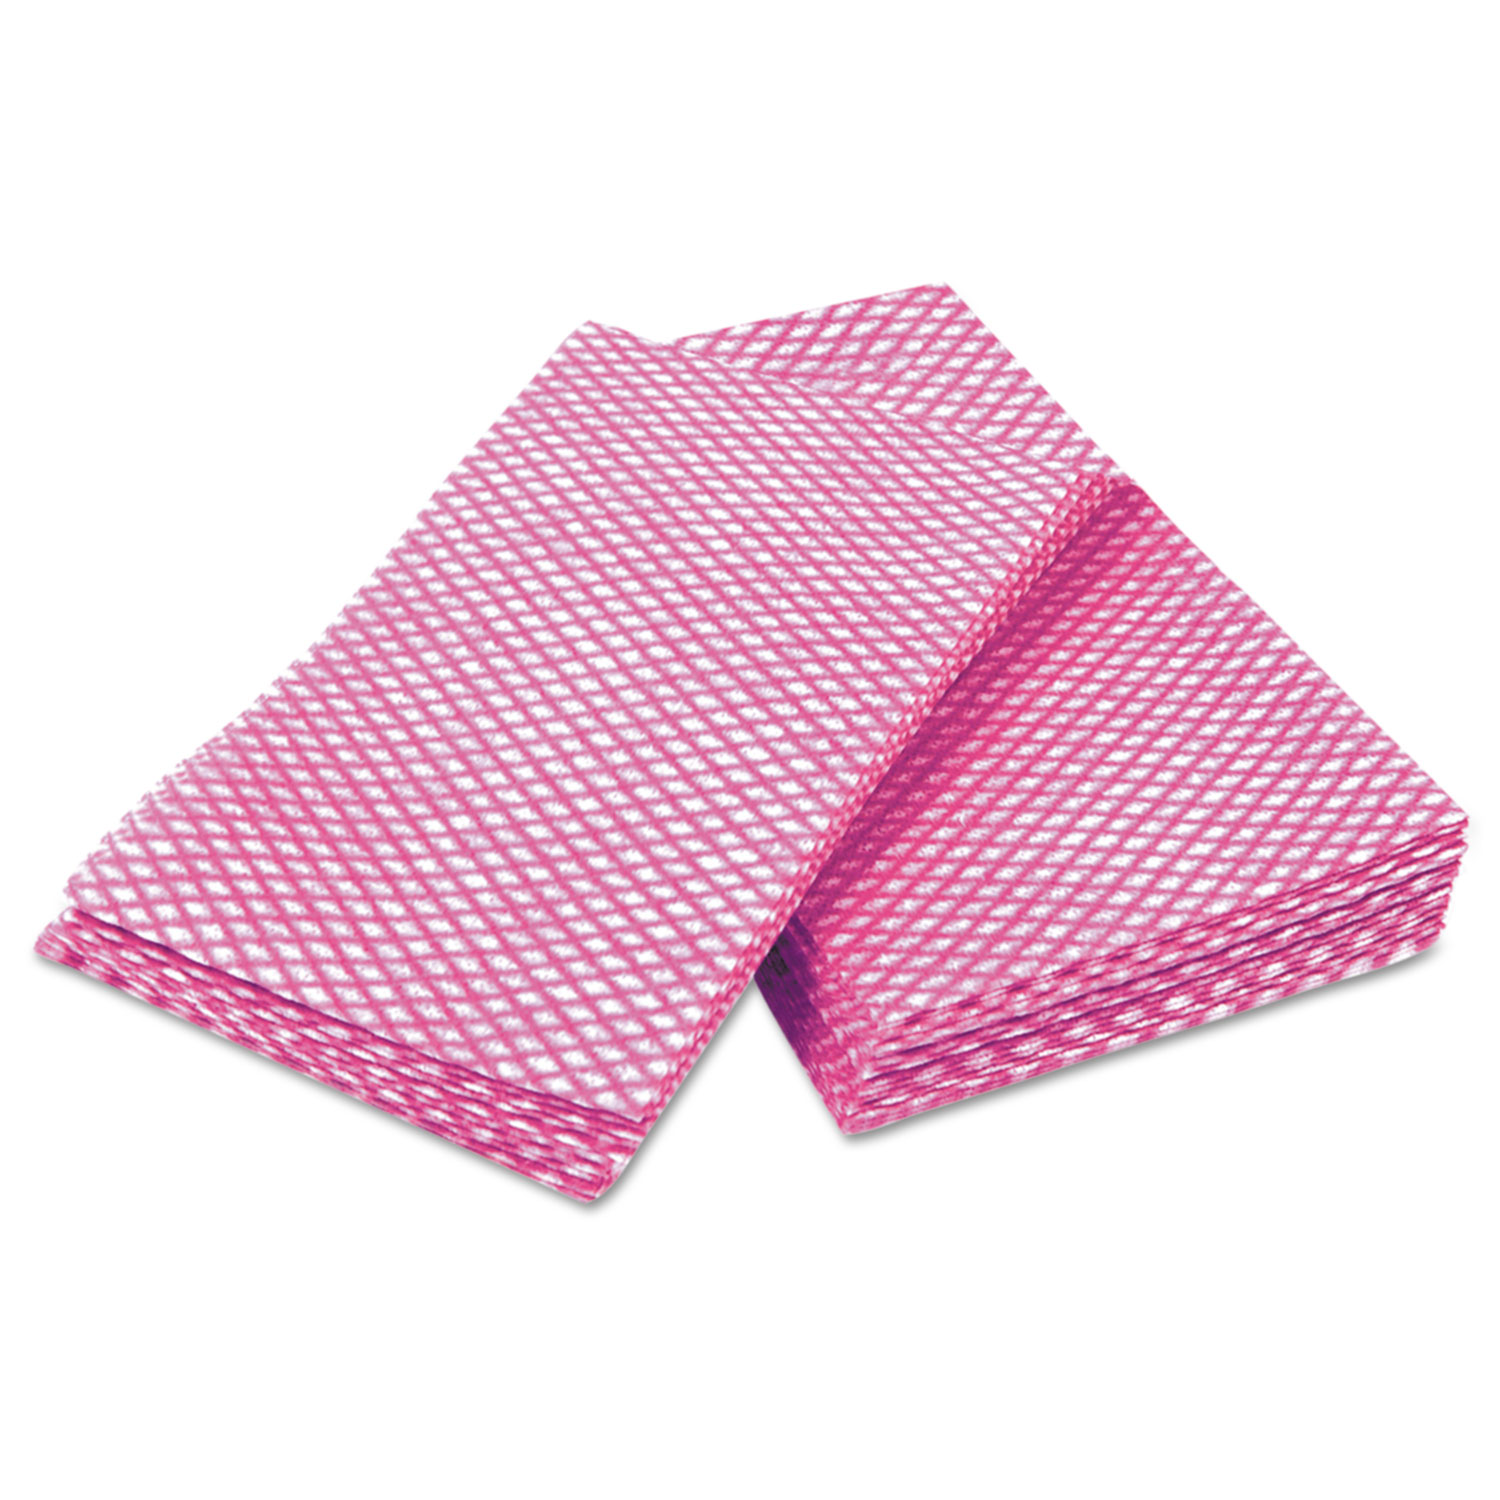  Cascades PRO W900 Tuff-Job Durable Foodservice Towels, Pink/White, 12 x 24, 200/Carton (CSDW900) 